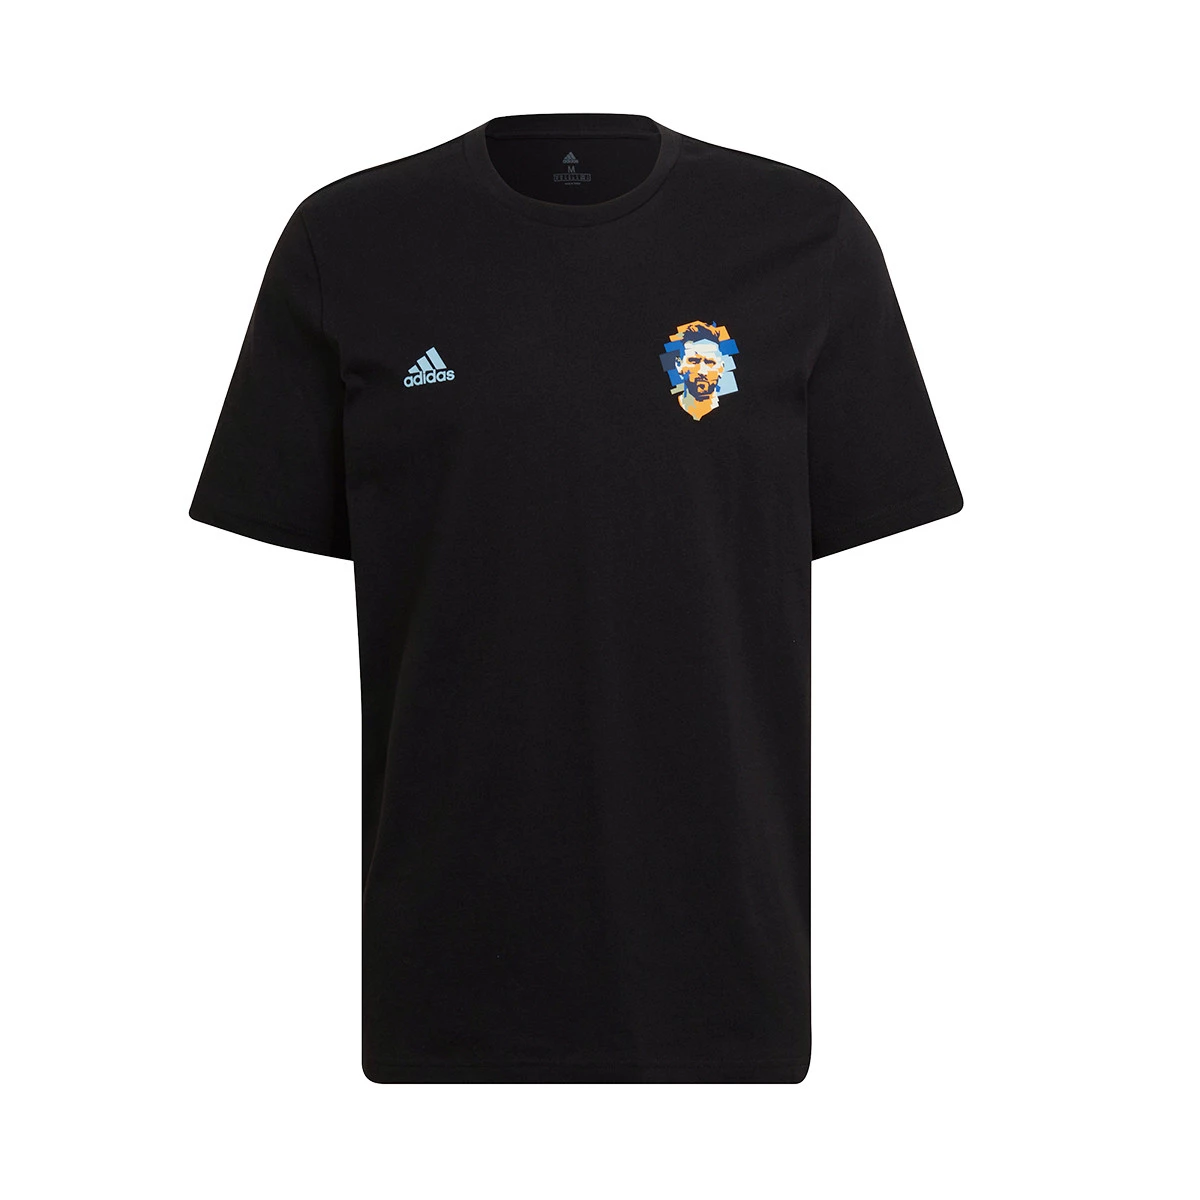 Adidas Lionel Messi tričko čierne pánske